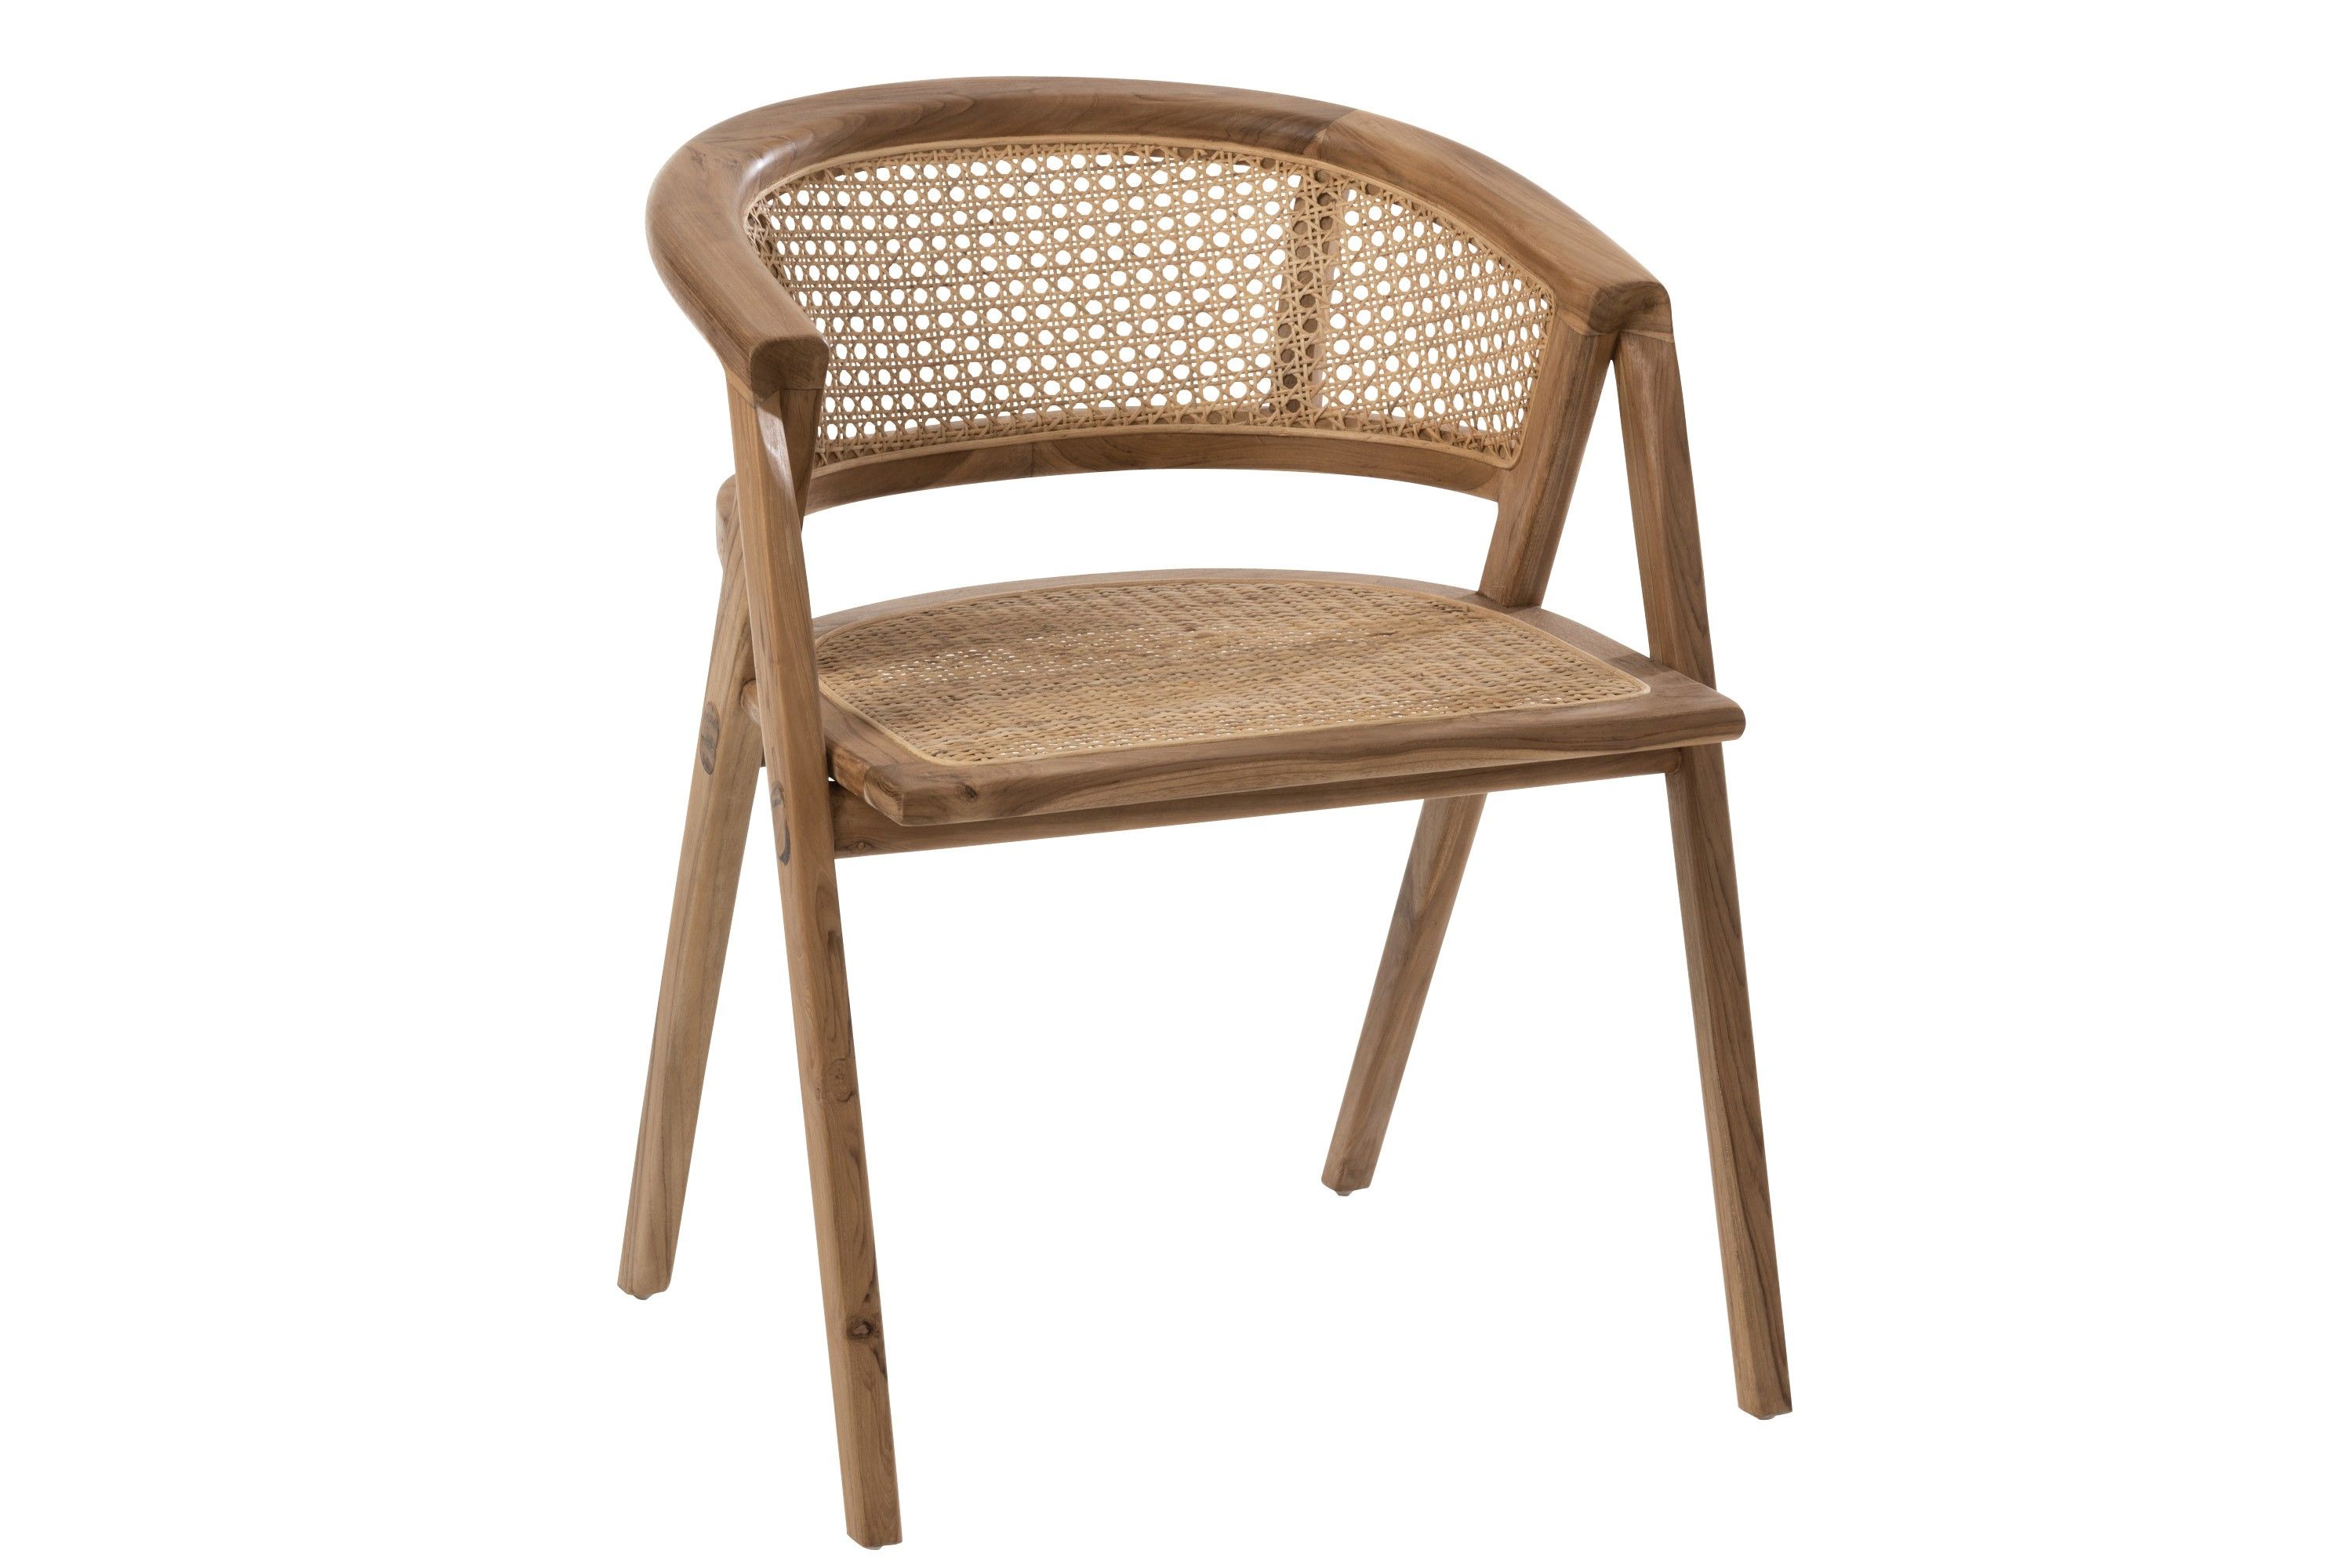 Hnedá drevená stolička Ani Teak s bambusovým výpletom - 59 * 59 * 73cm